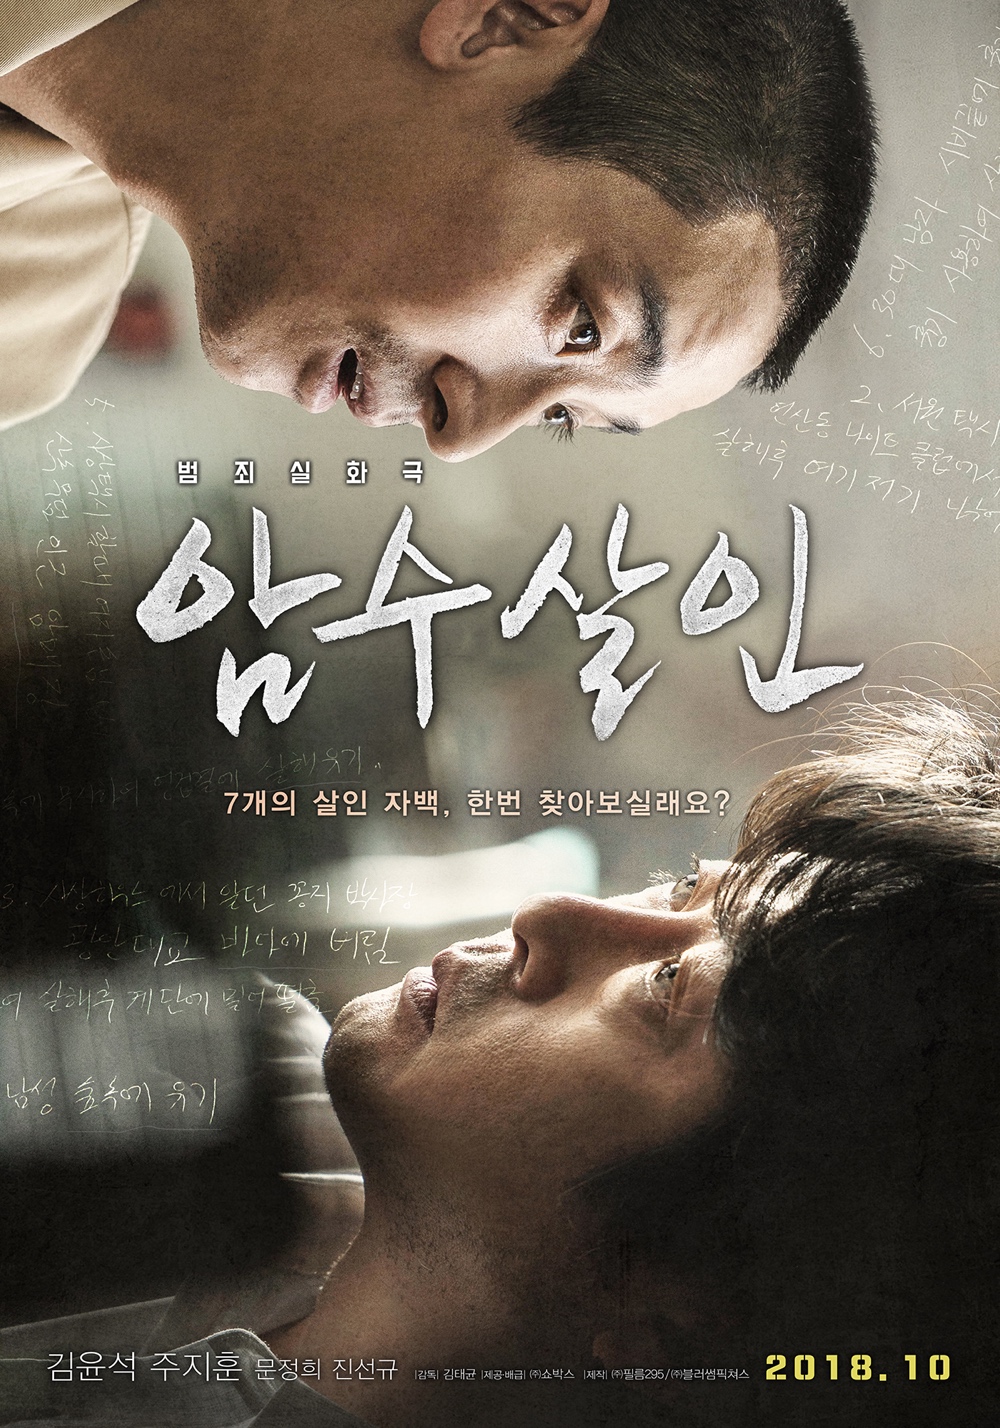 Trailer and teaser poster for movie “Dark Figure of Crime” | AsianWiki Blog